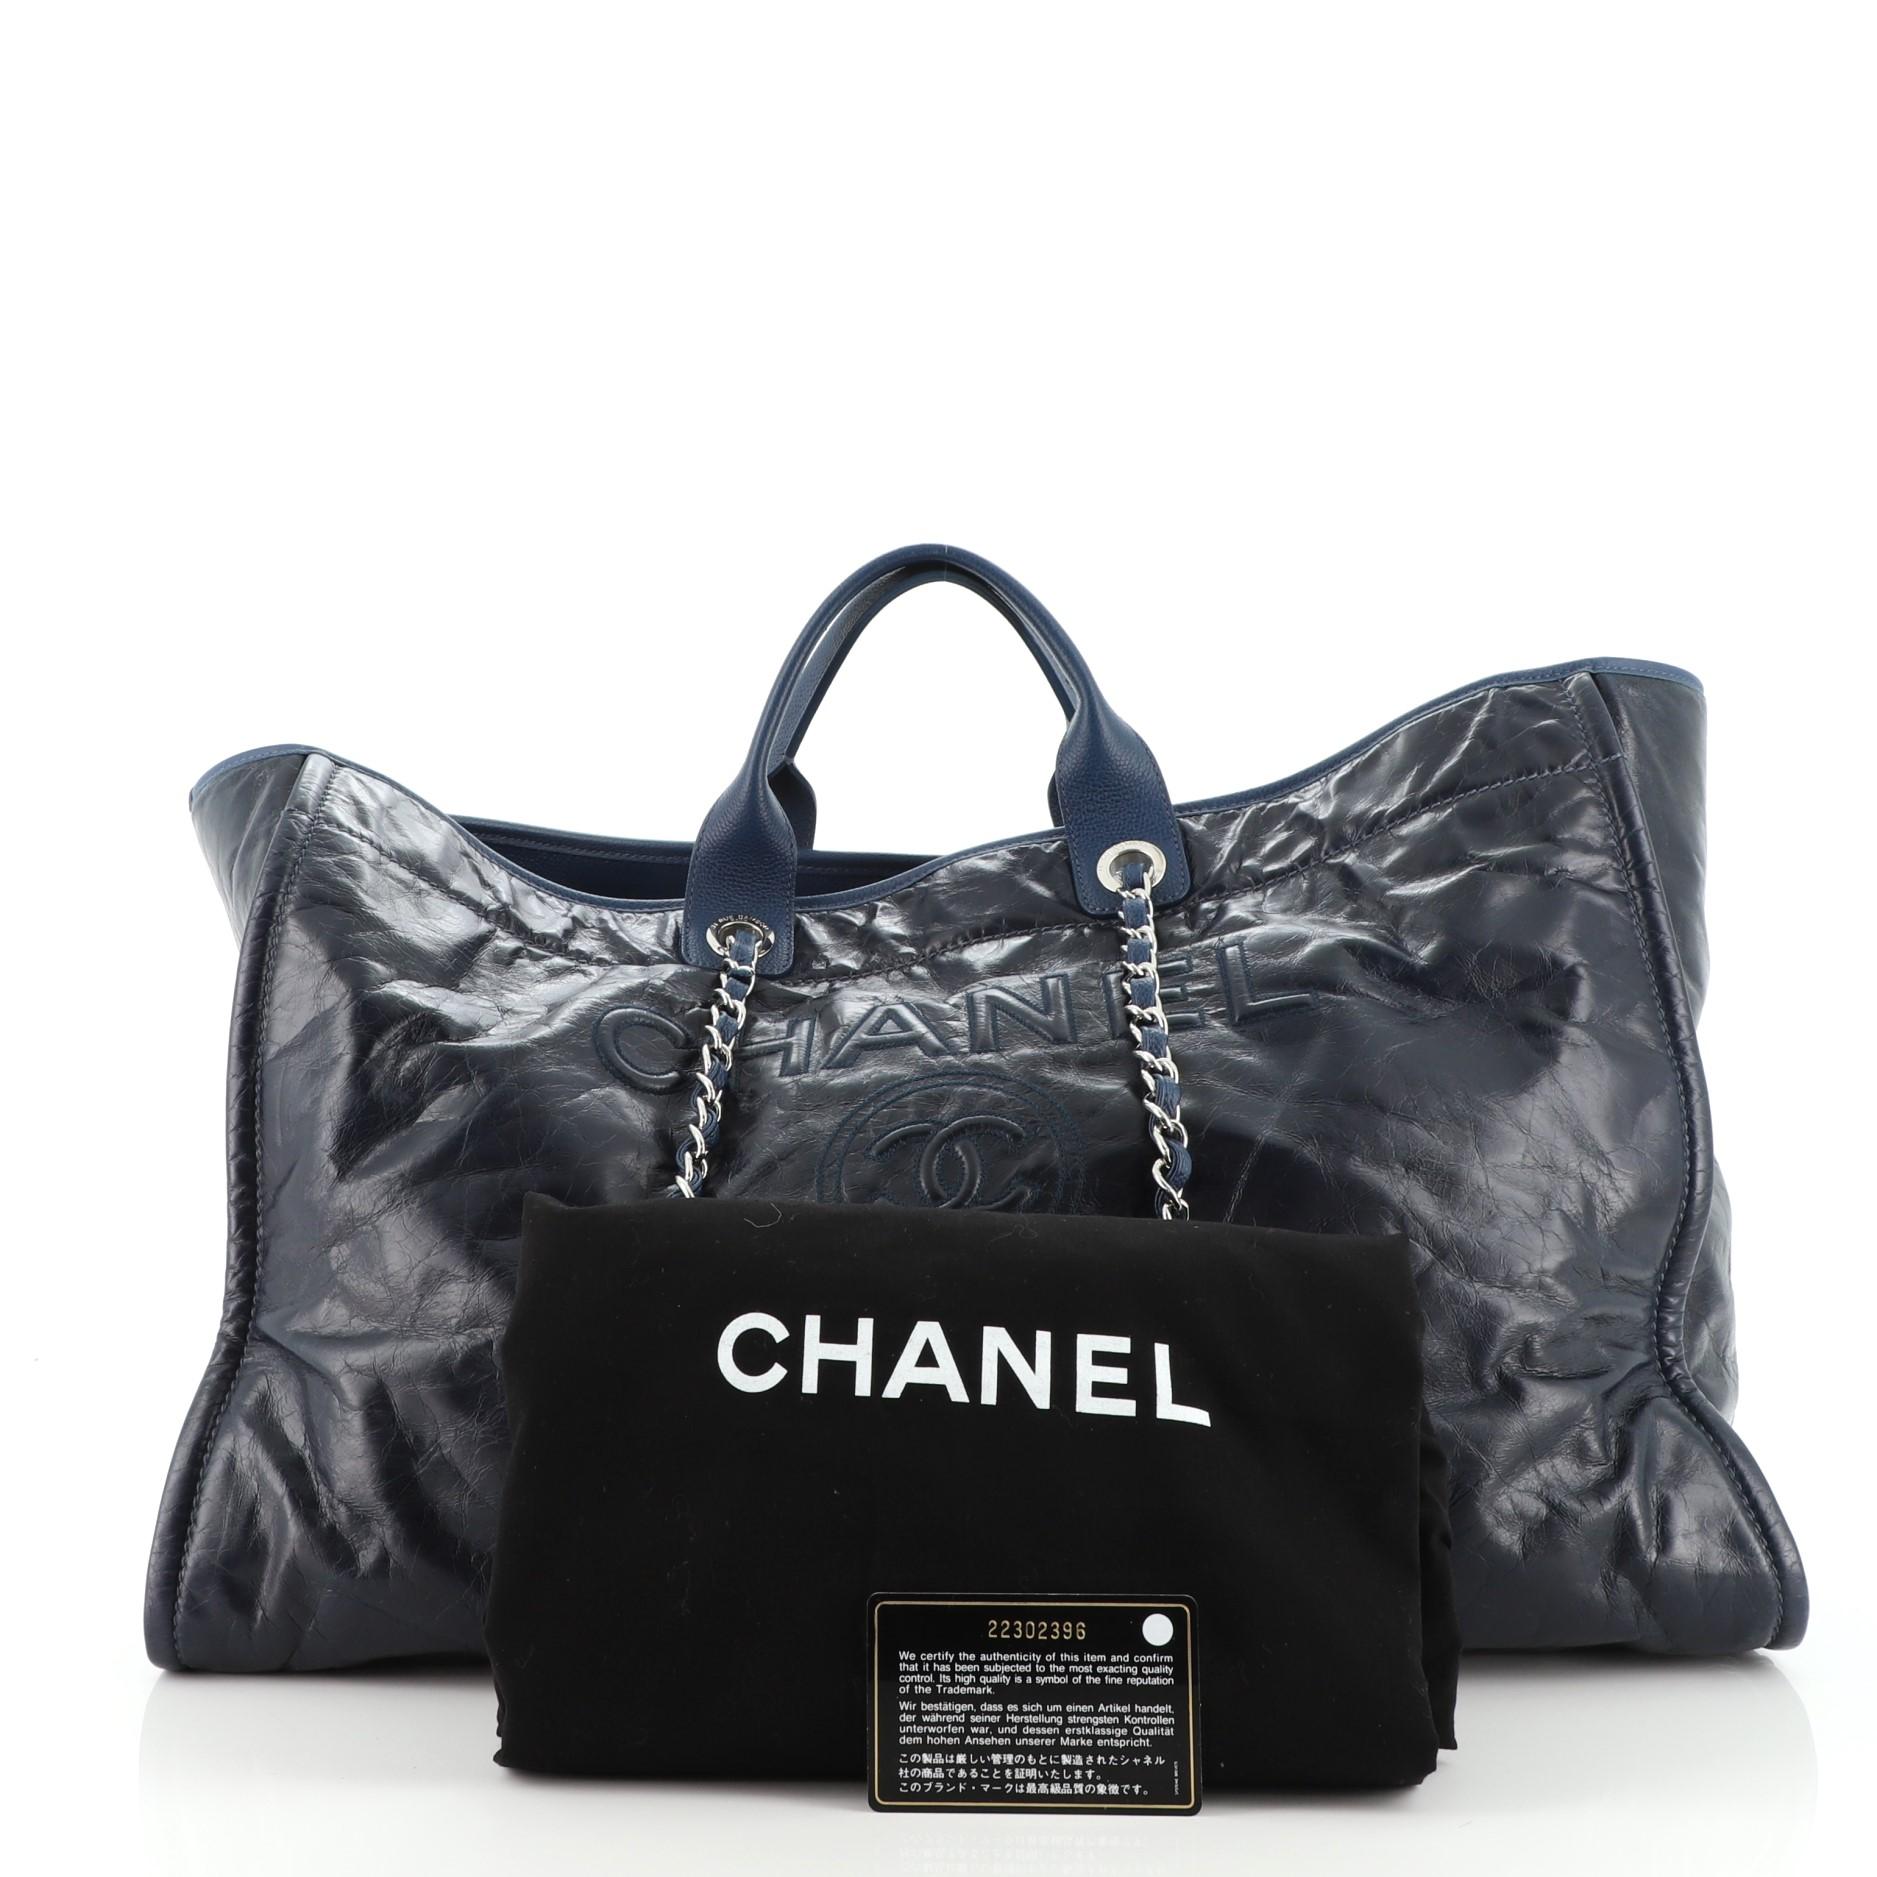 Chanel Deauville Glazed Black - For Sale on 1stDibs